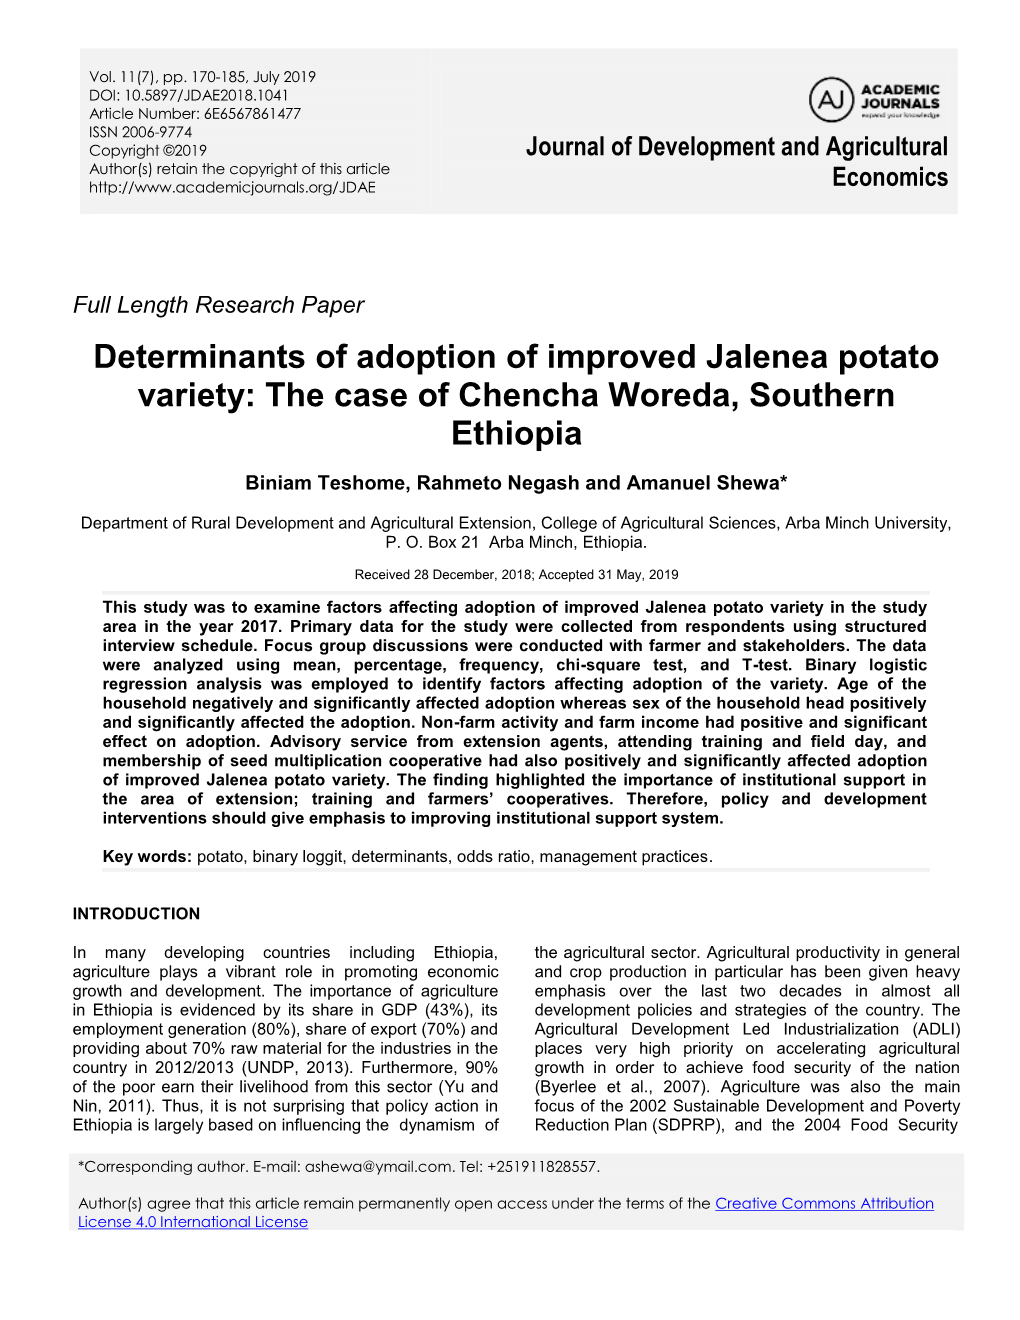 Determinants of Adoption of Improved Jalenea Potato Variety: the Case of Chencha Woreda, Southern Ethiopia